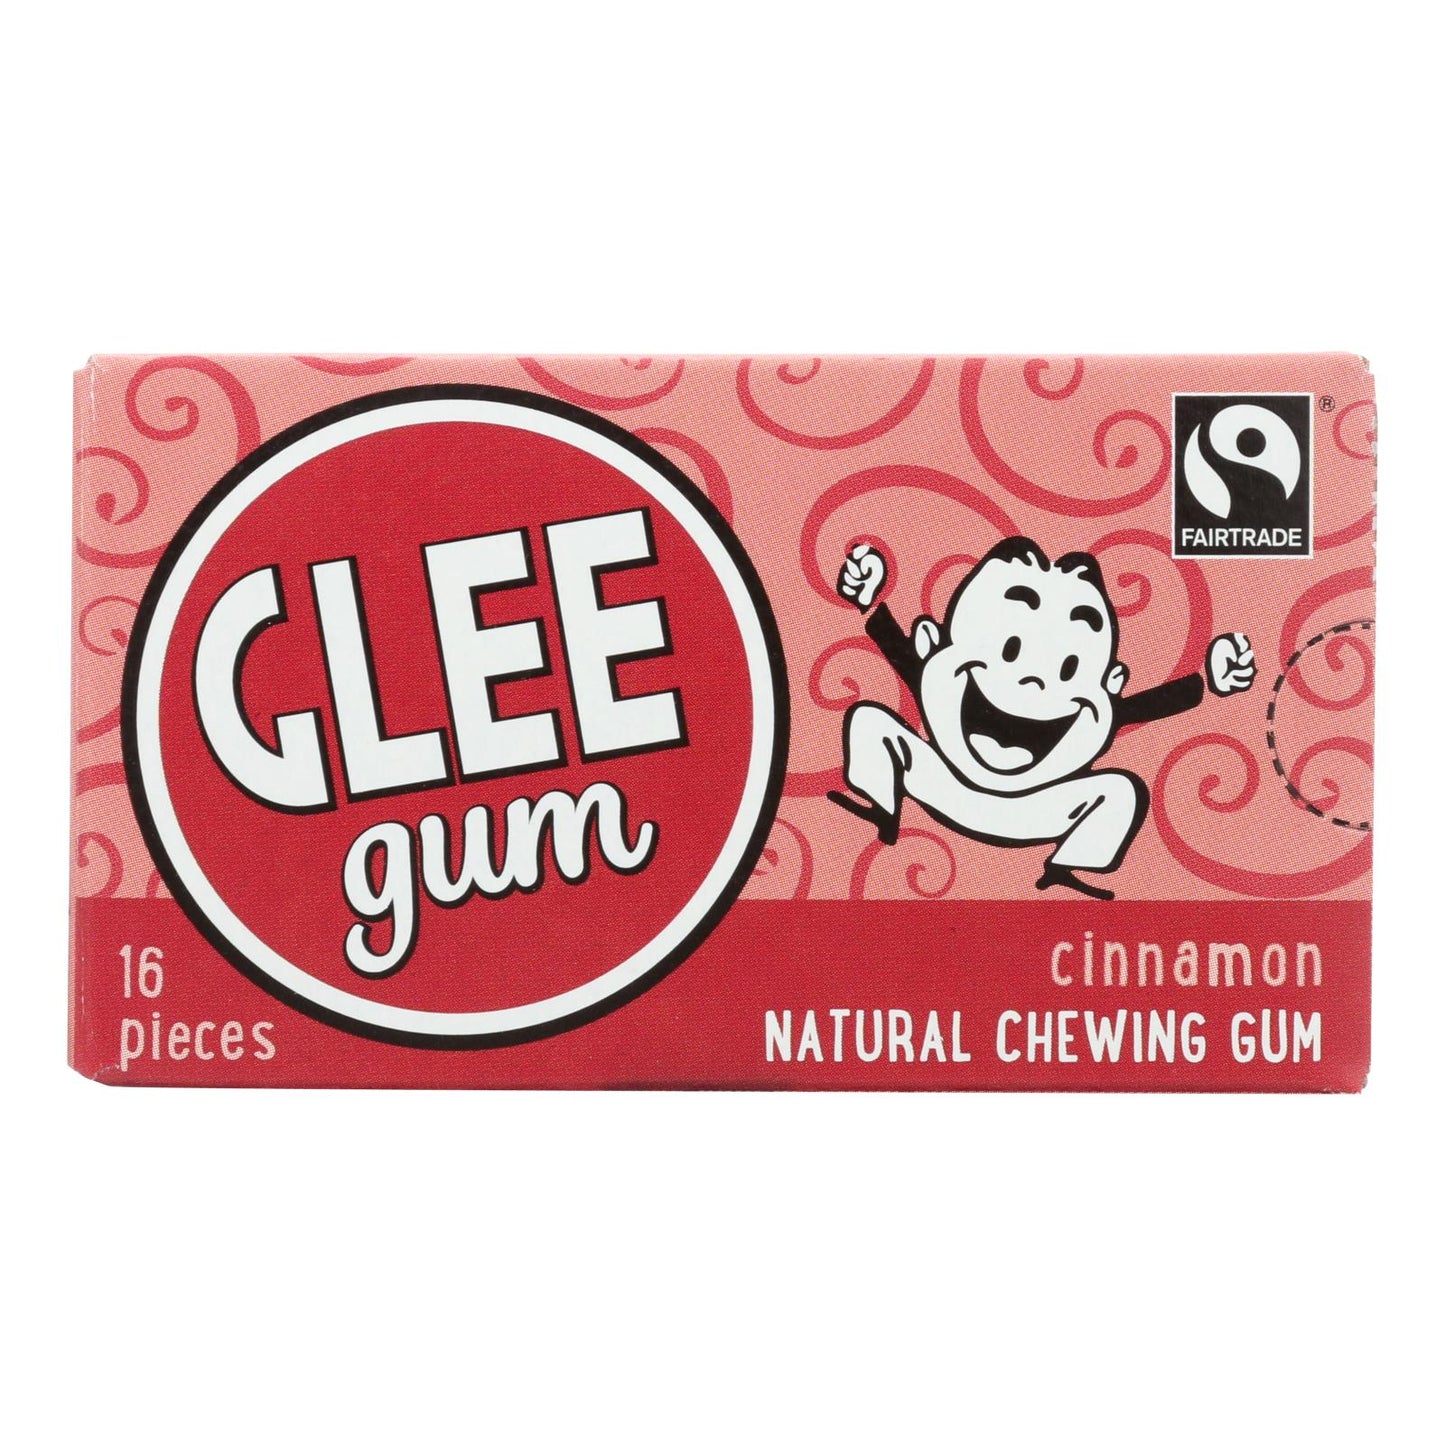 Glee Gum Chewing Gum - Cinnamon - Case Of 12 - 16 Pieces